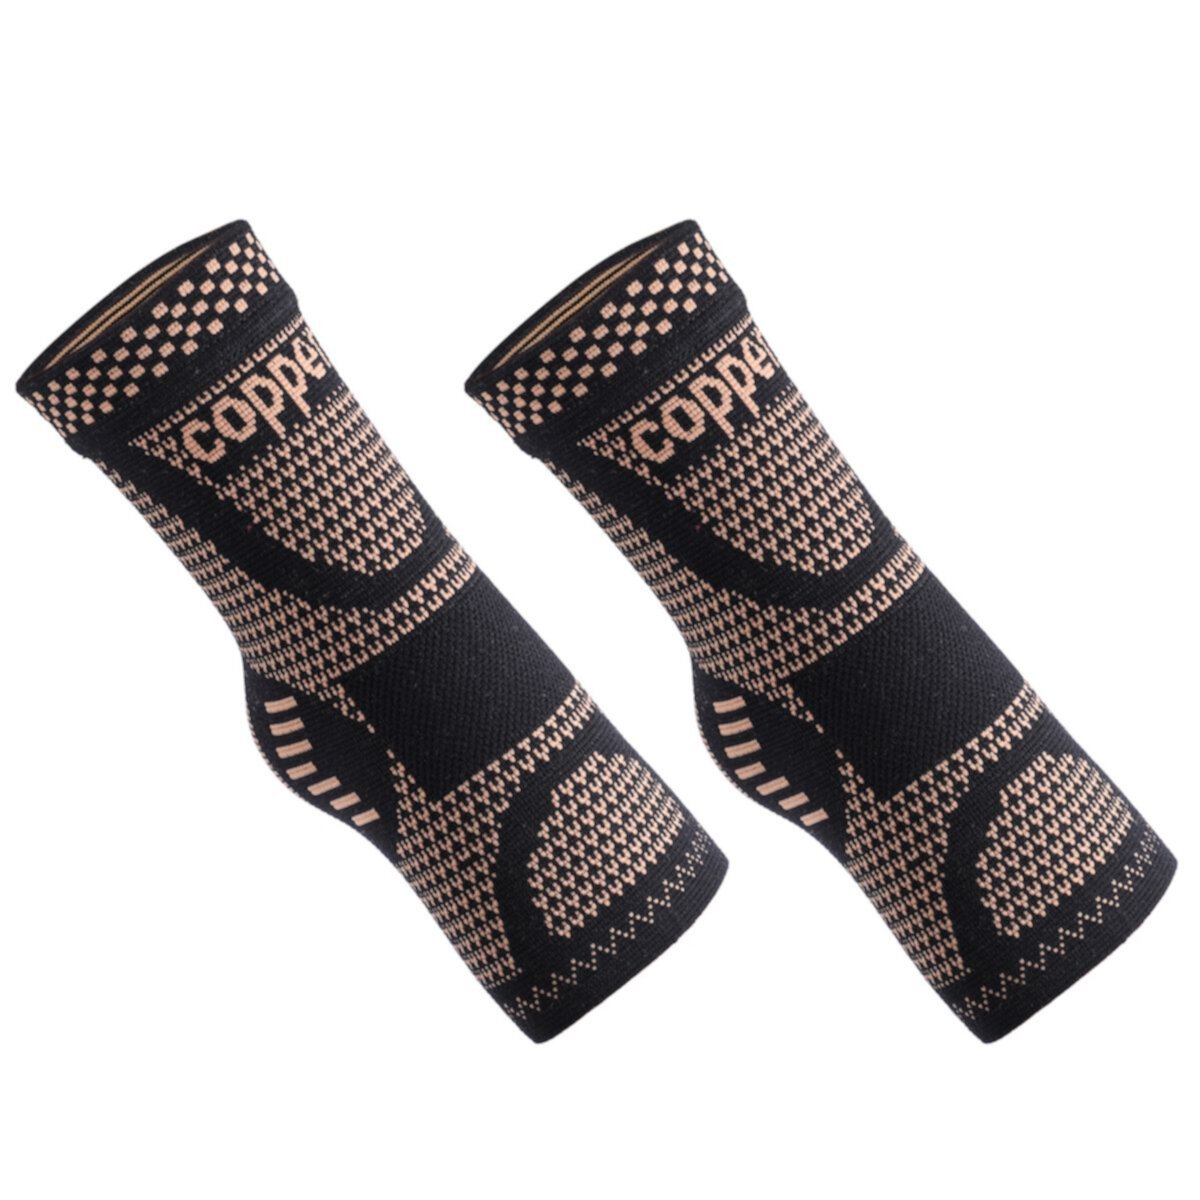 Pair Ankle Compression Sleeve Socks Ankle Brace Support Orange Black Unique Bargains